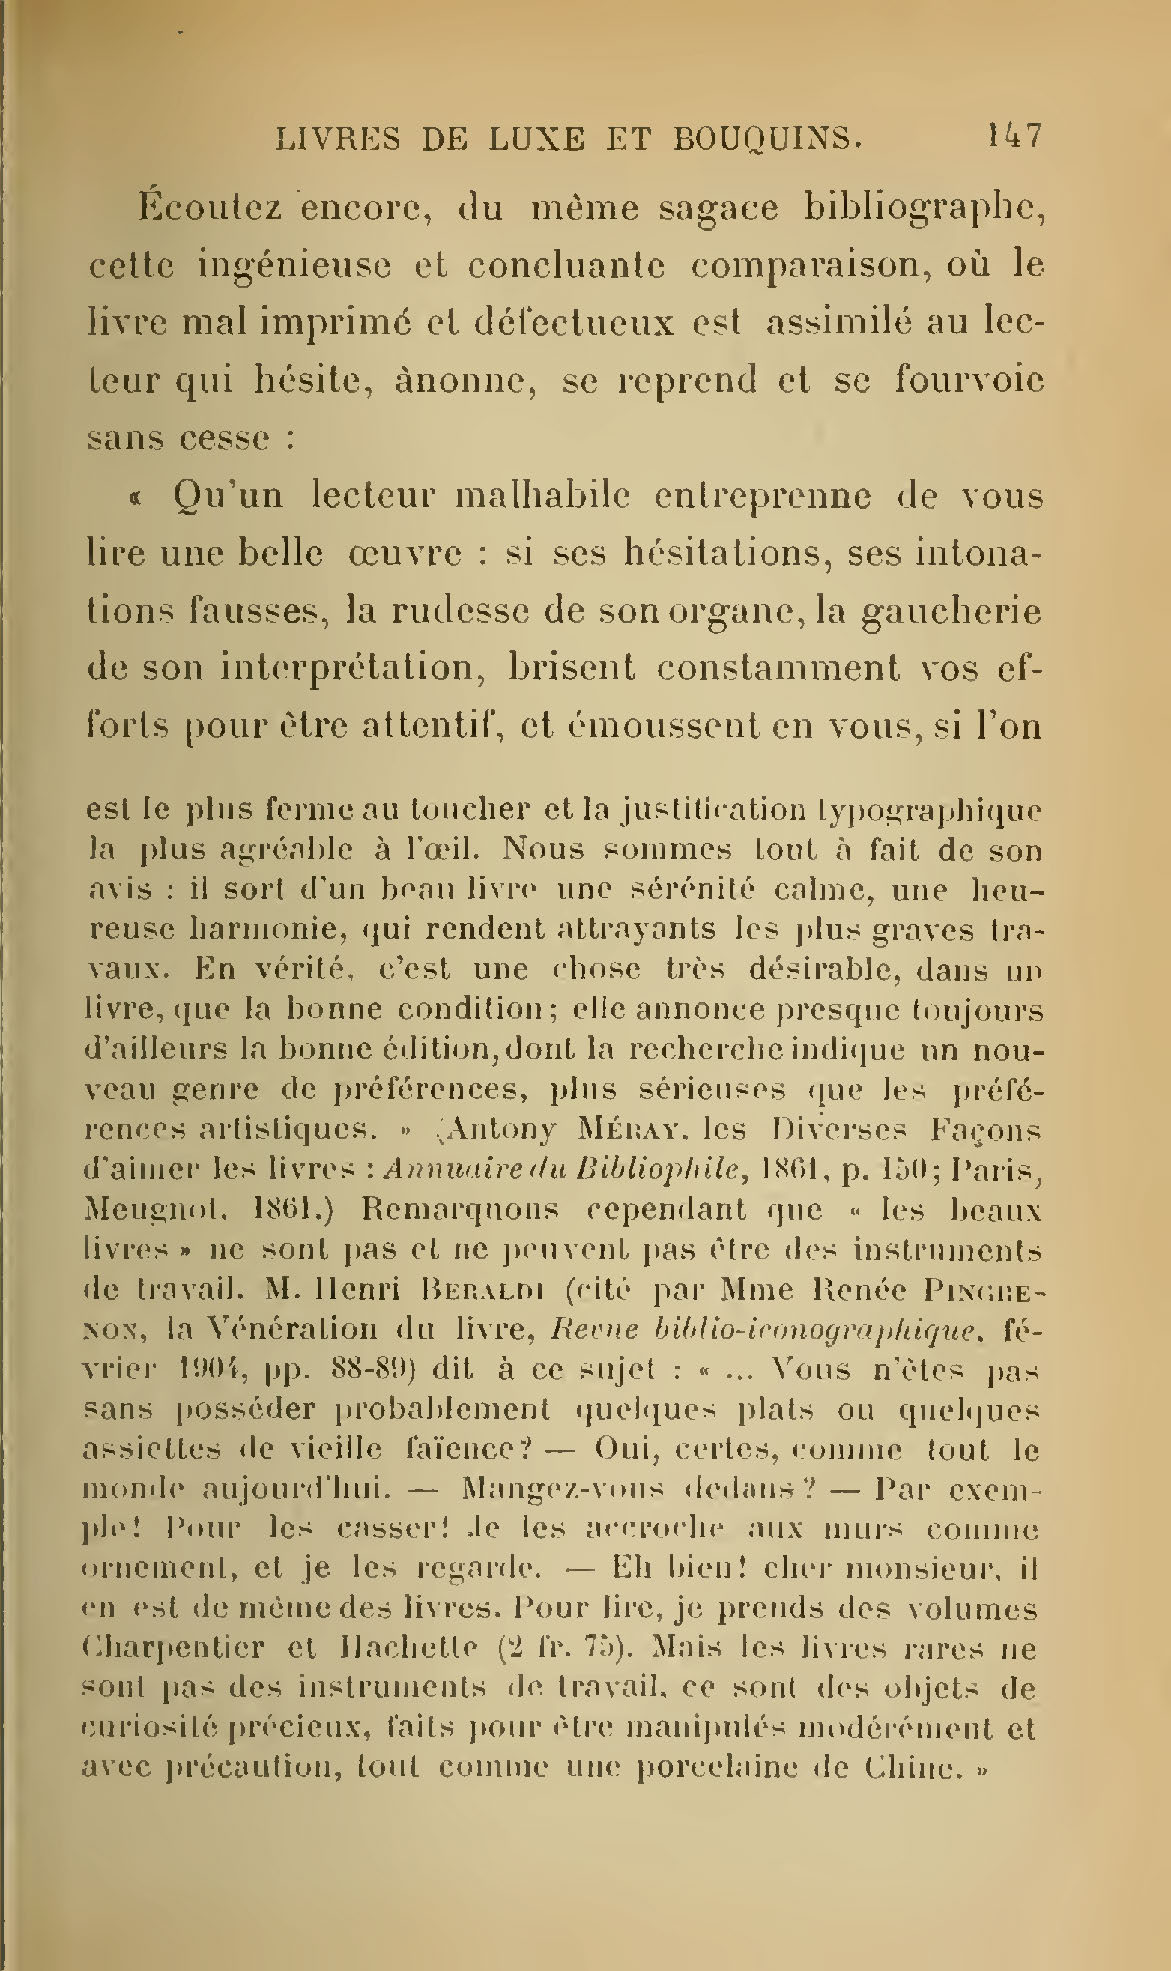 Albert Cim, Le Livre, t. II, p. 147.